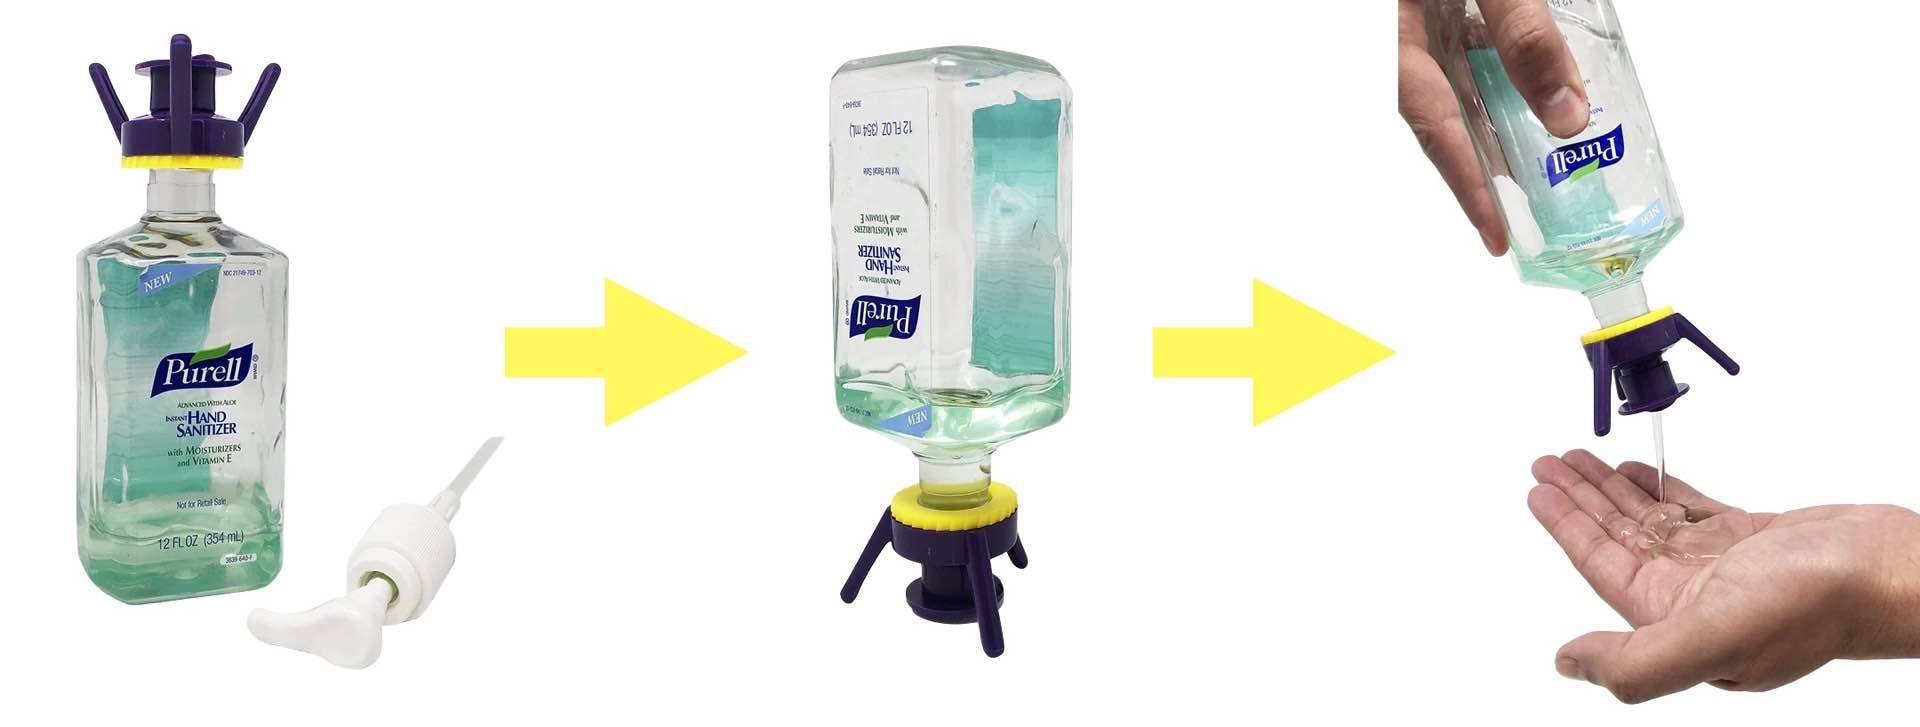 flip-it-bottle-emptying-kits-sanitizer